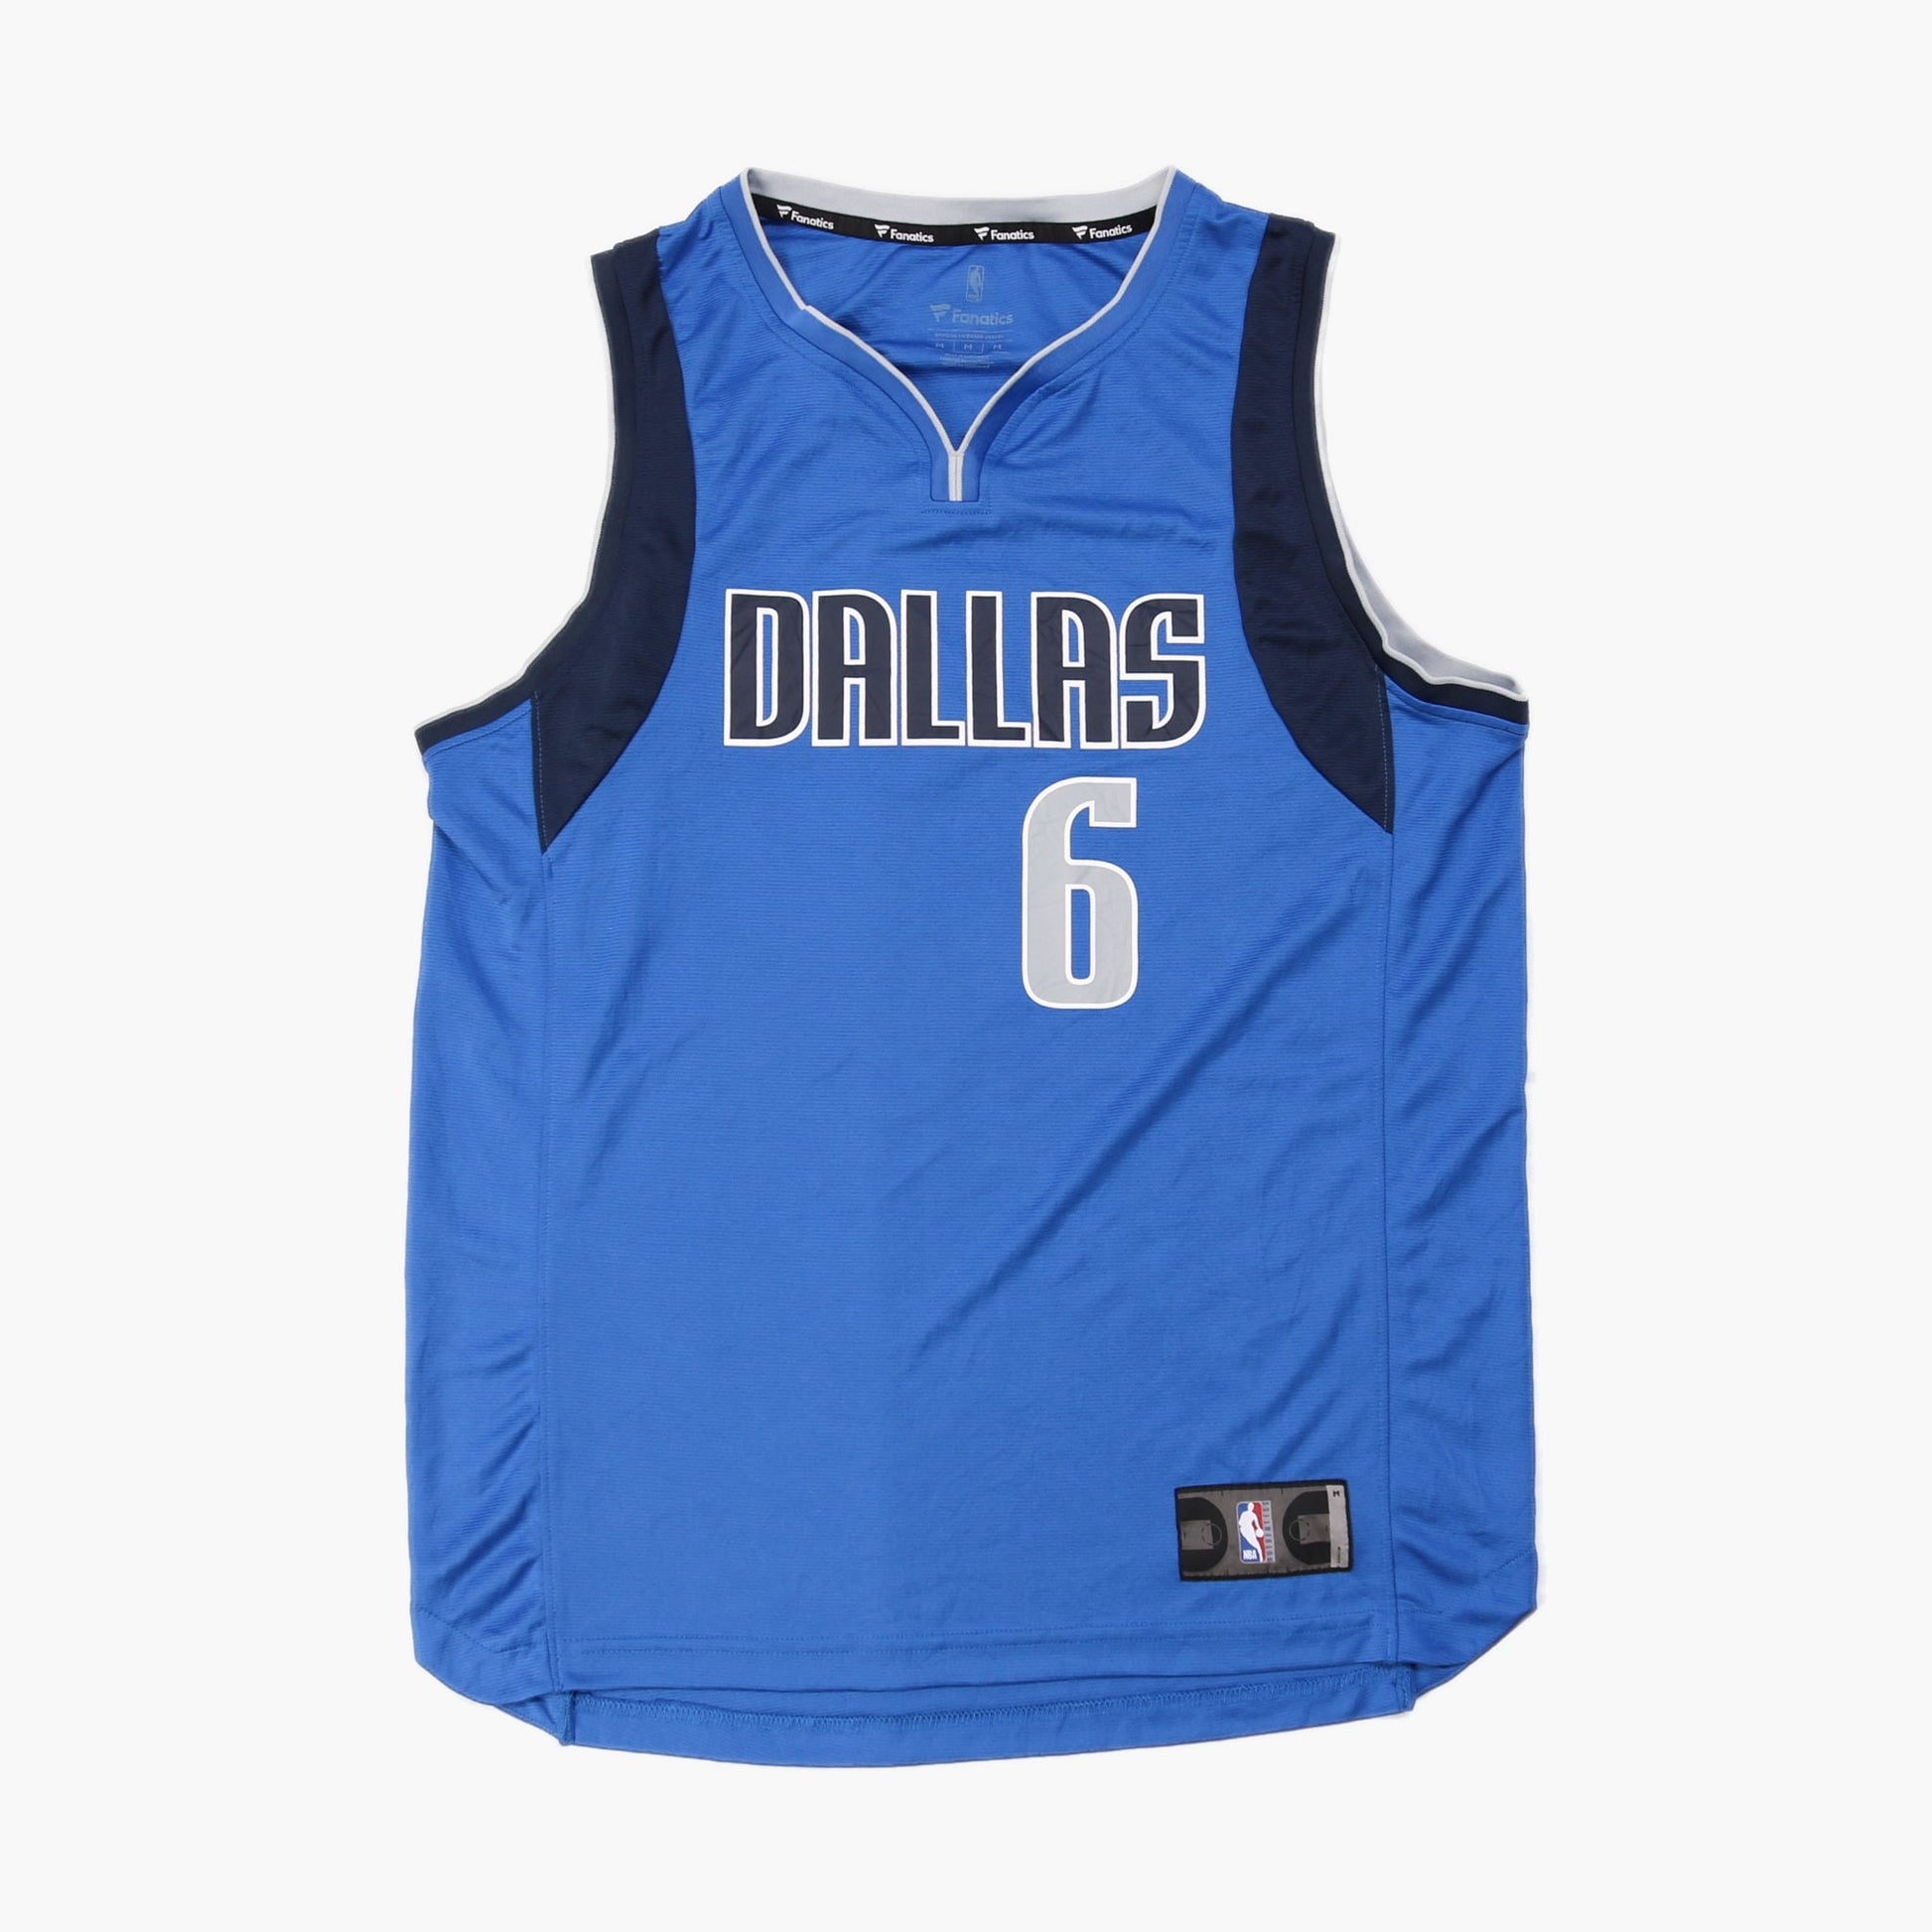 Vintage Dallas Mavericks NBA Jersey 'Porzingis